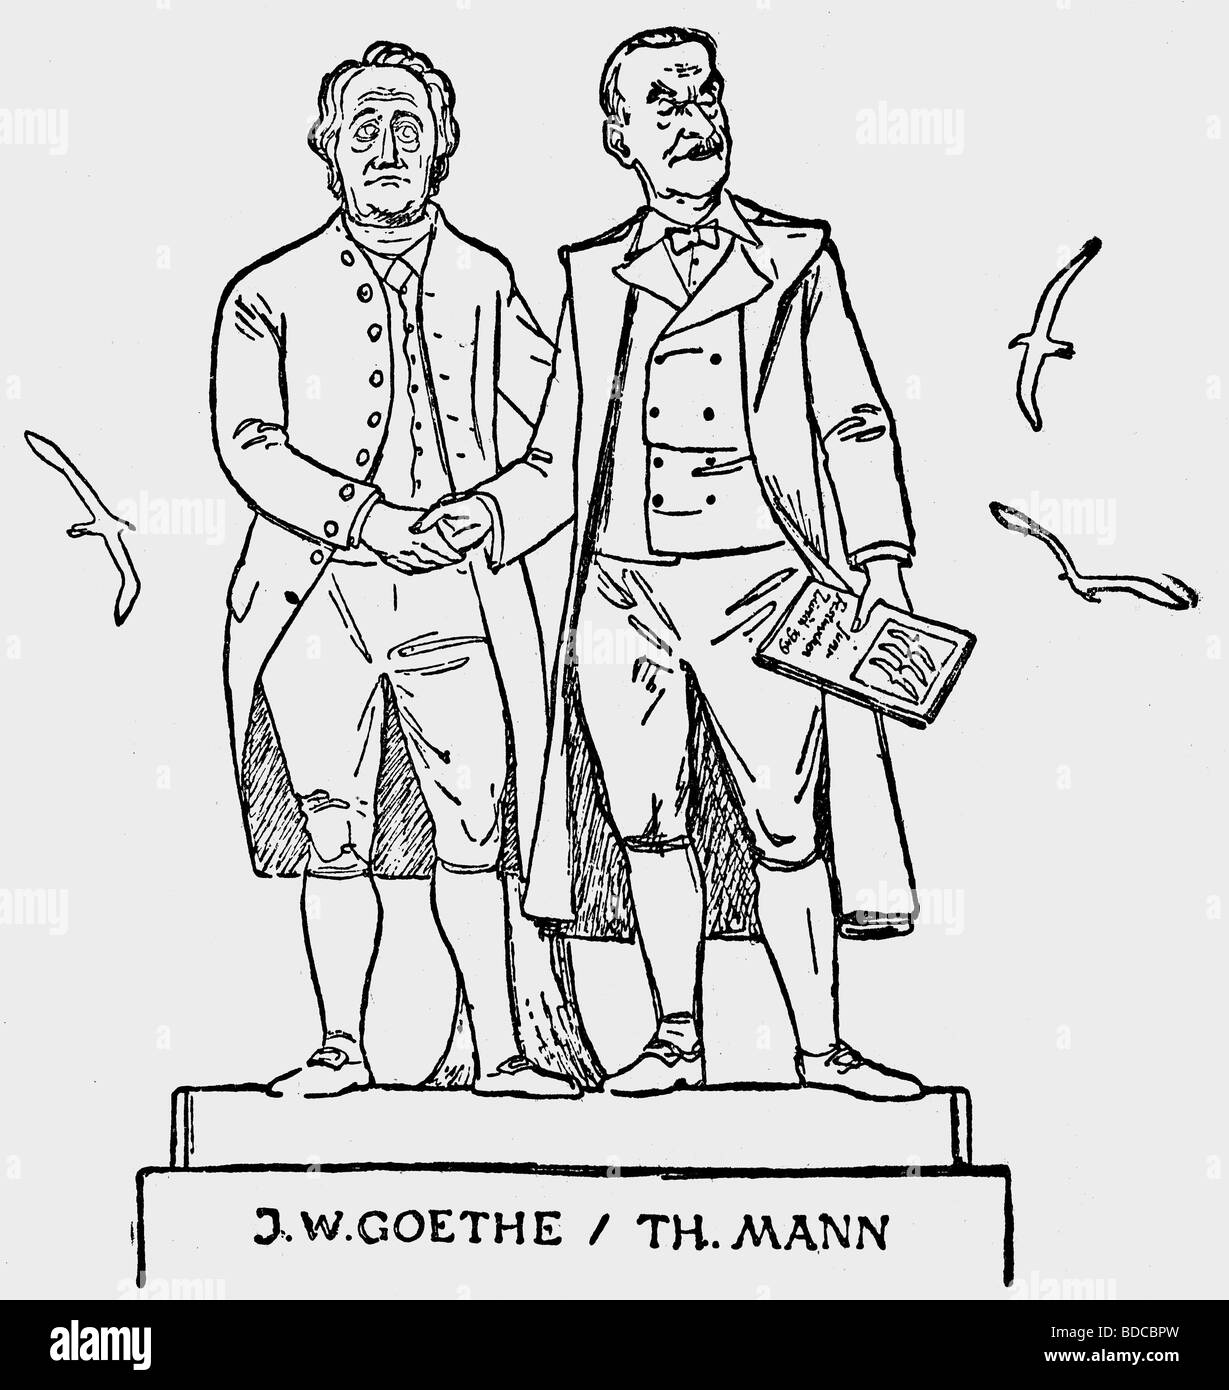 Mann, Thomas, 6.6.1875 - 12.8.1955, German author / writer, Swiss draft of the Thomas Mann and Johann Wolfgang von Goethe monument, Stock Photo